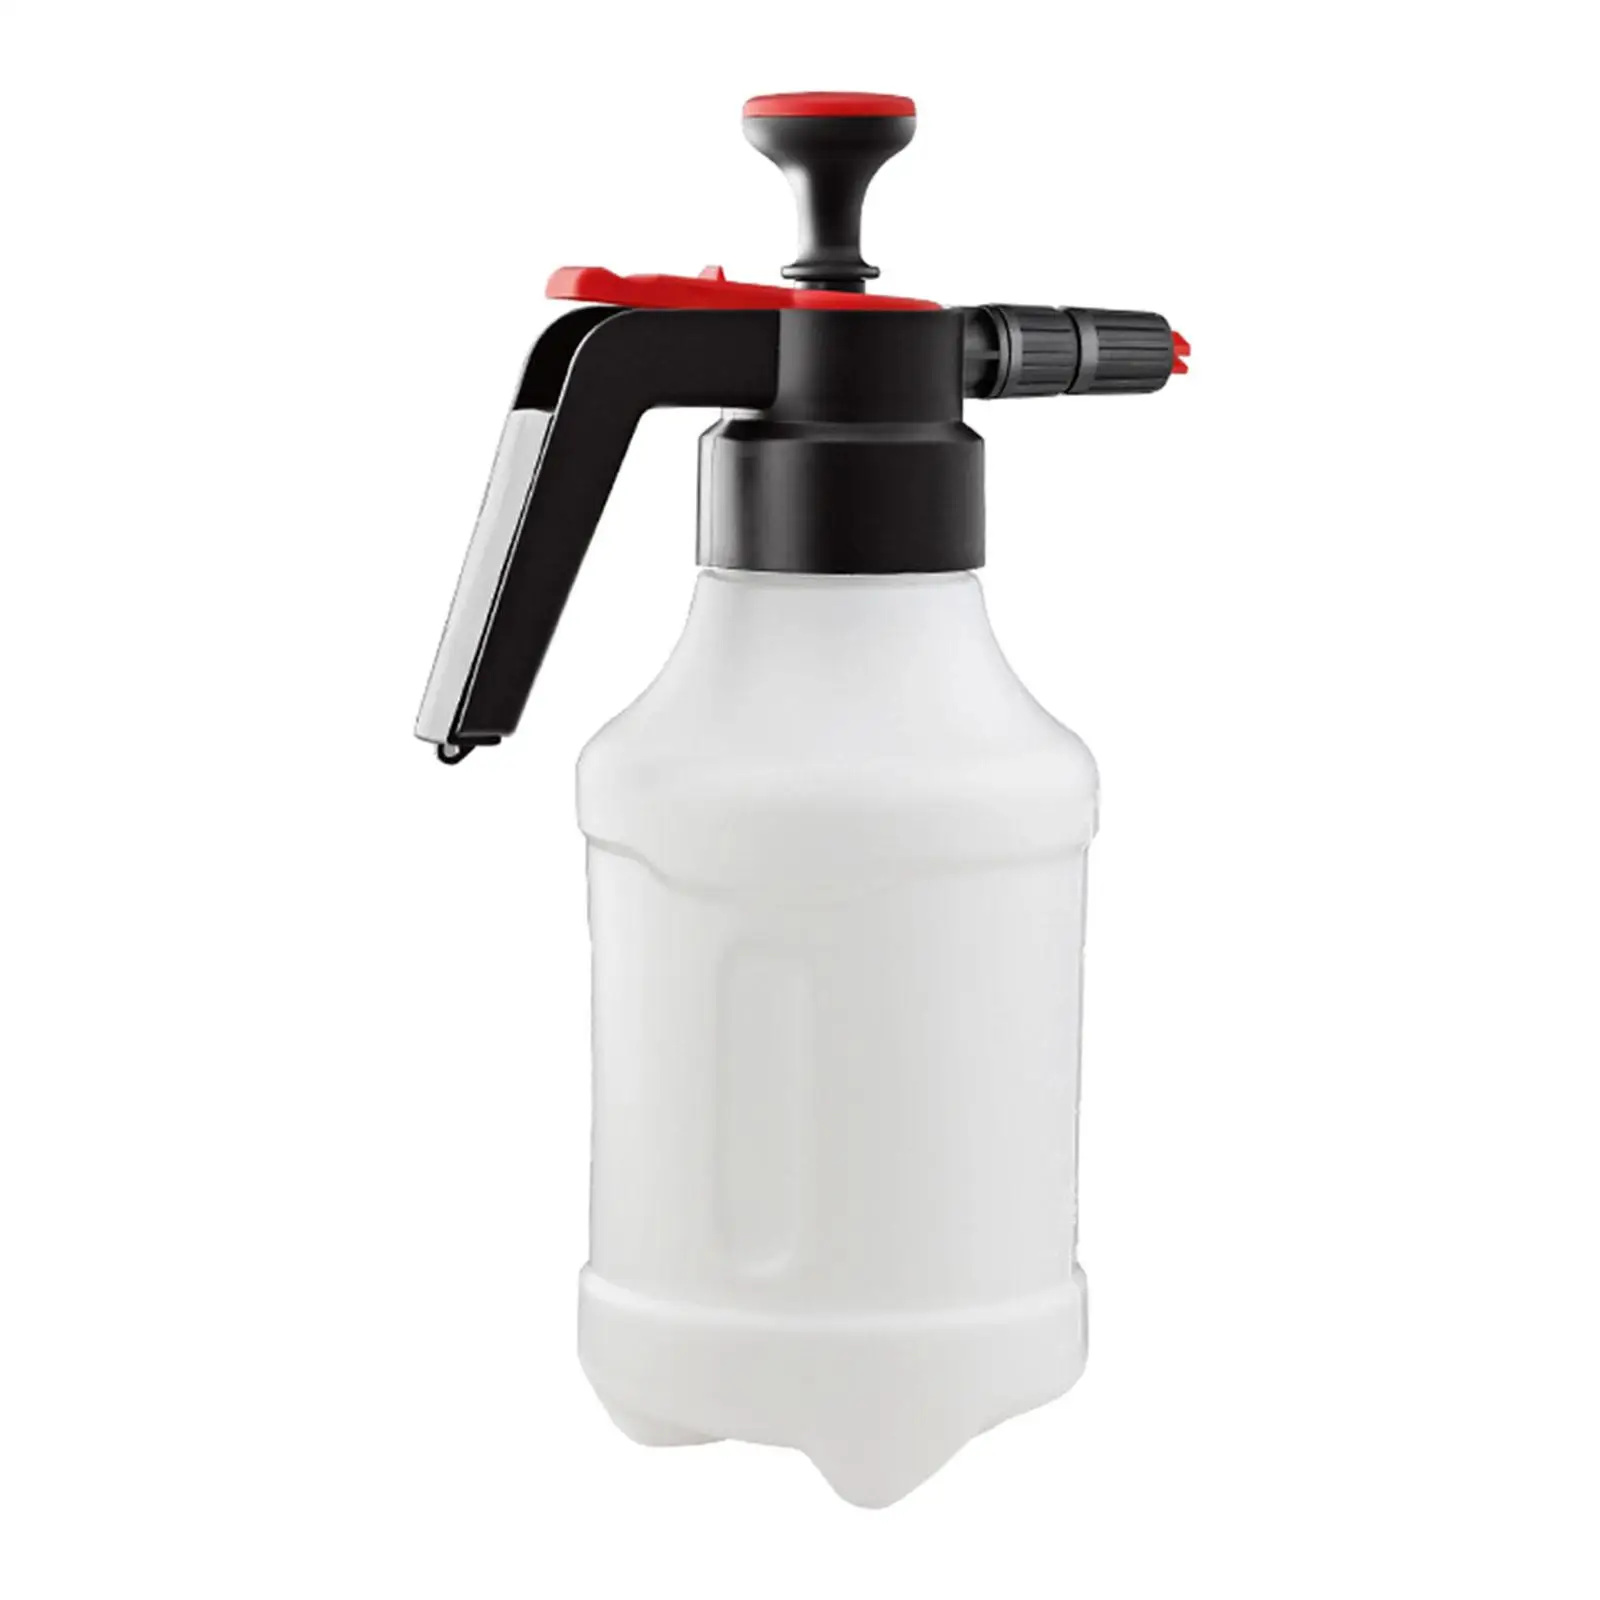 Foam Spray Bottle Adjustable Hand Pressurized for Vehicle Cleaning Garden